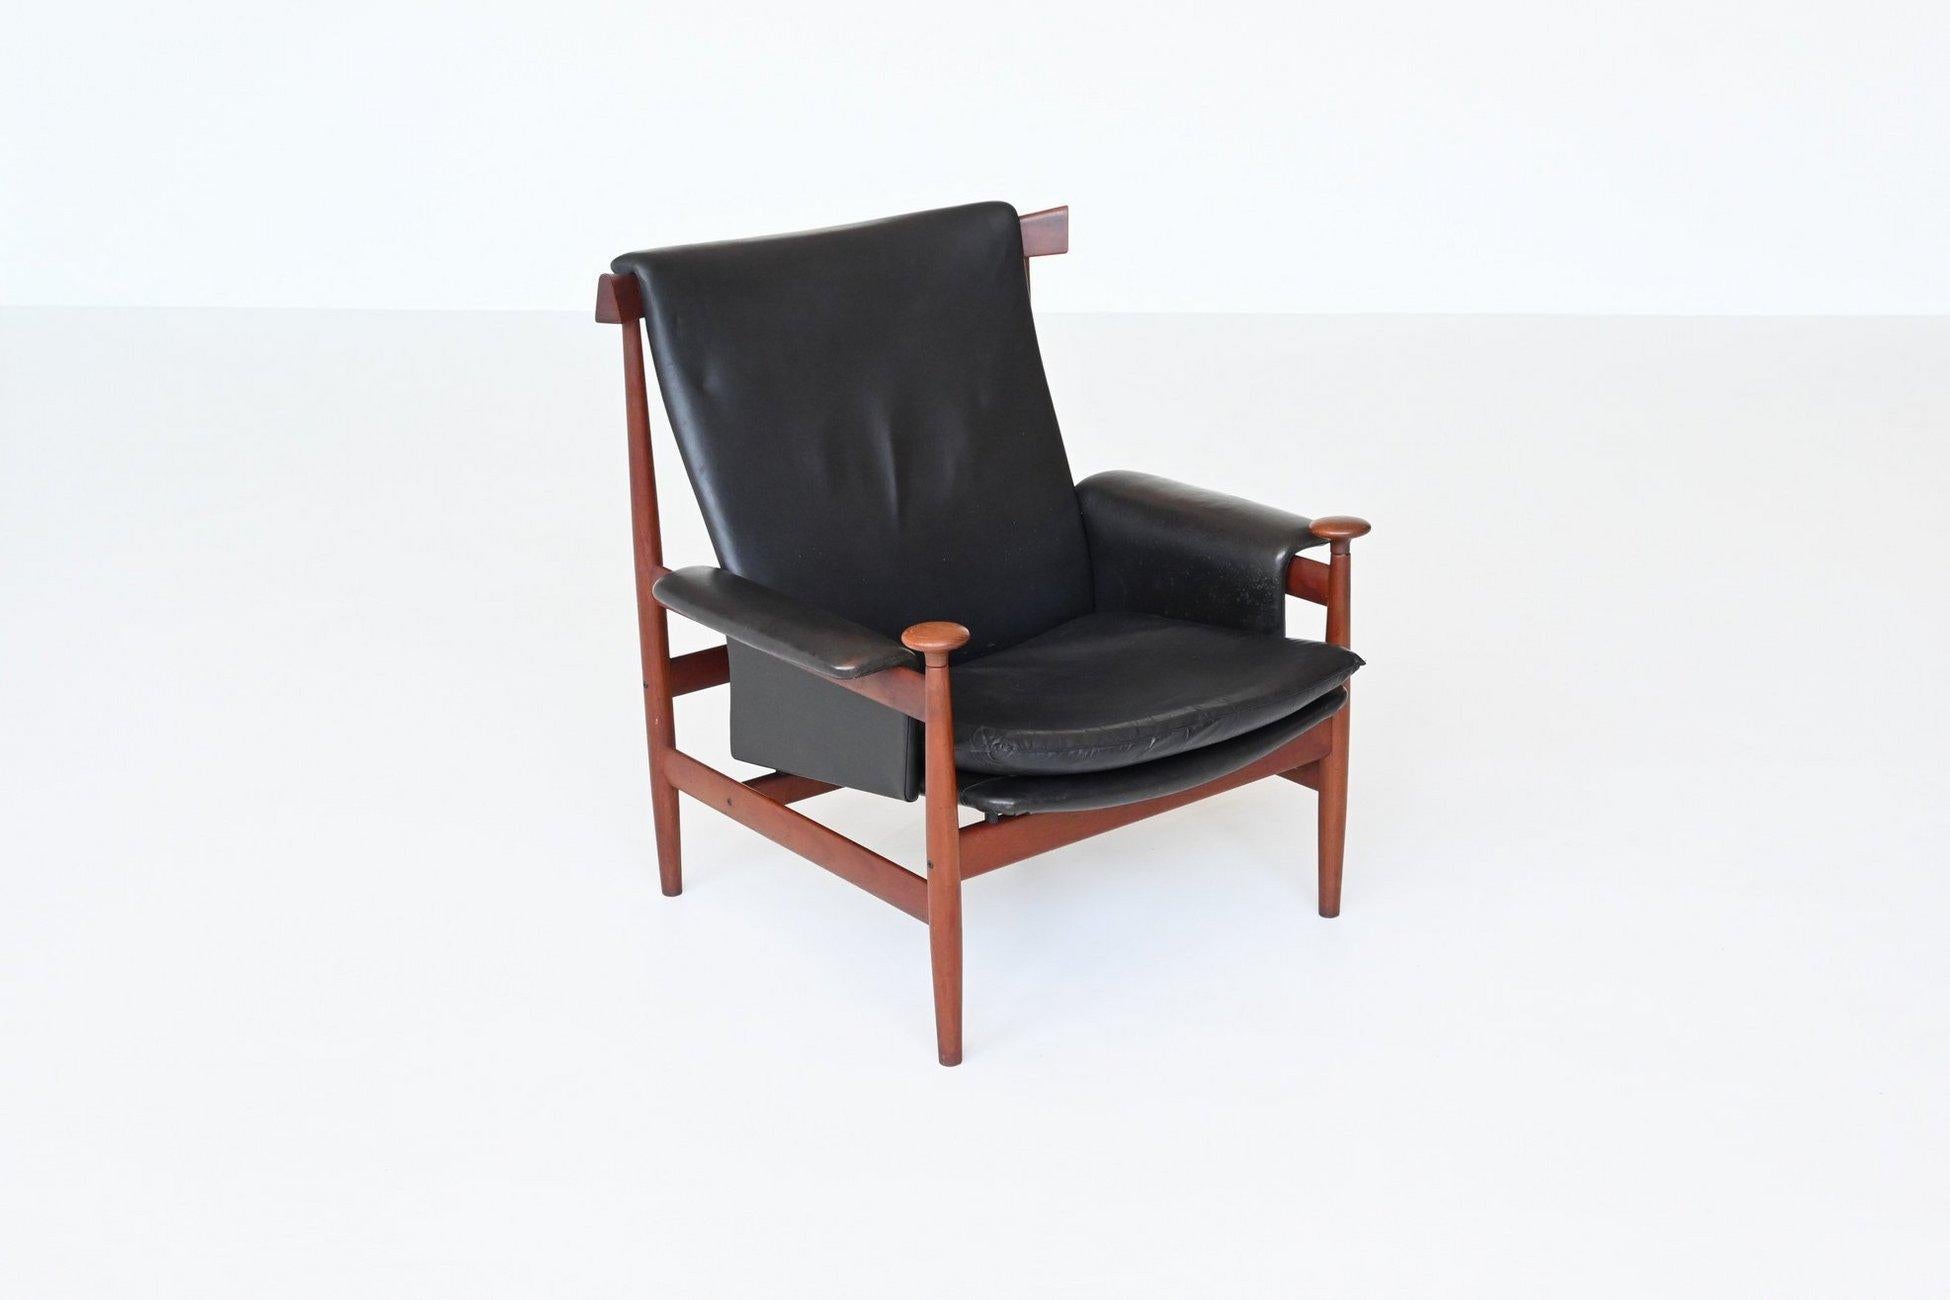 Mid-20th Century Finn Juhl model Bwana lounge chair France and Son Denmark 1962